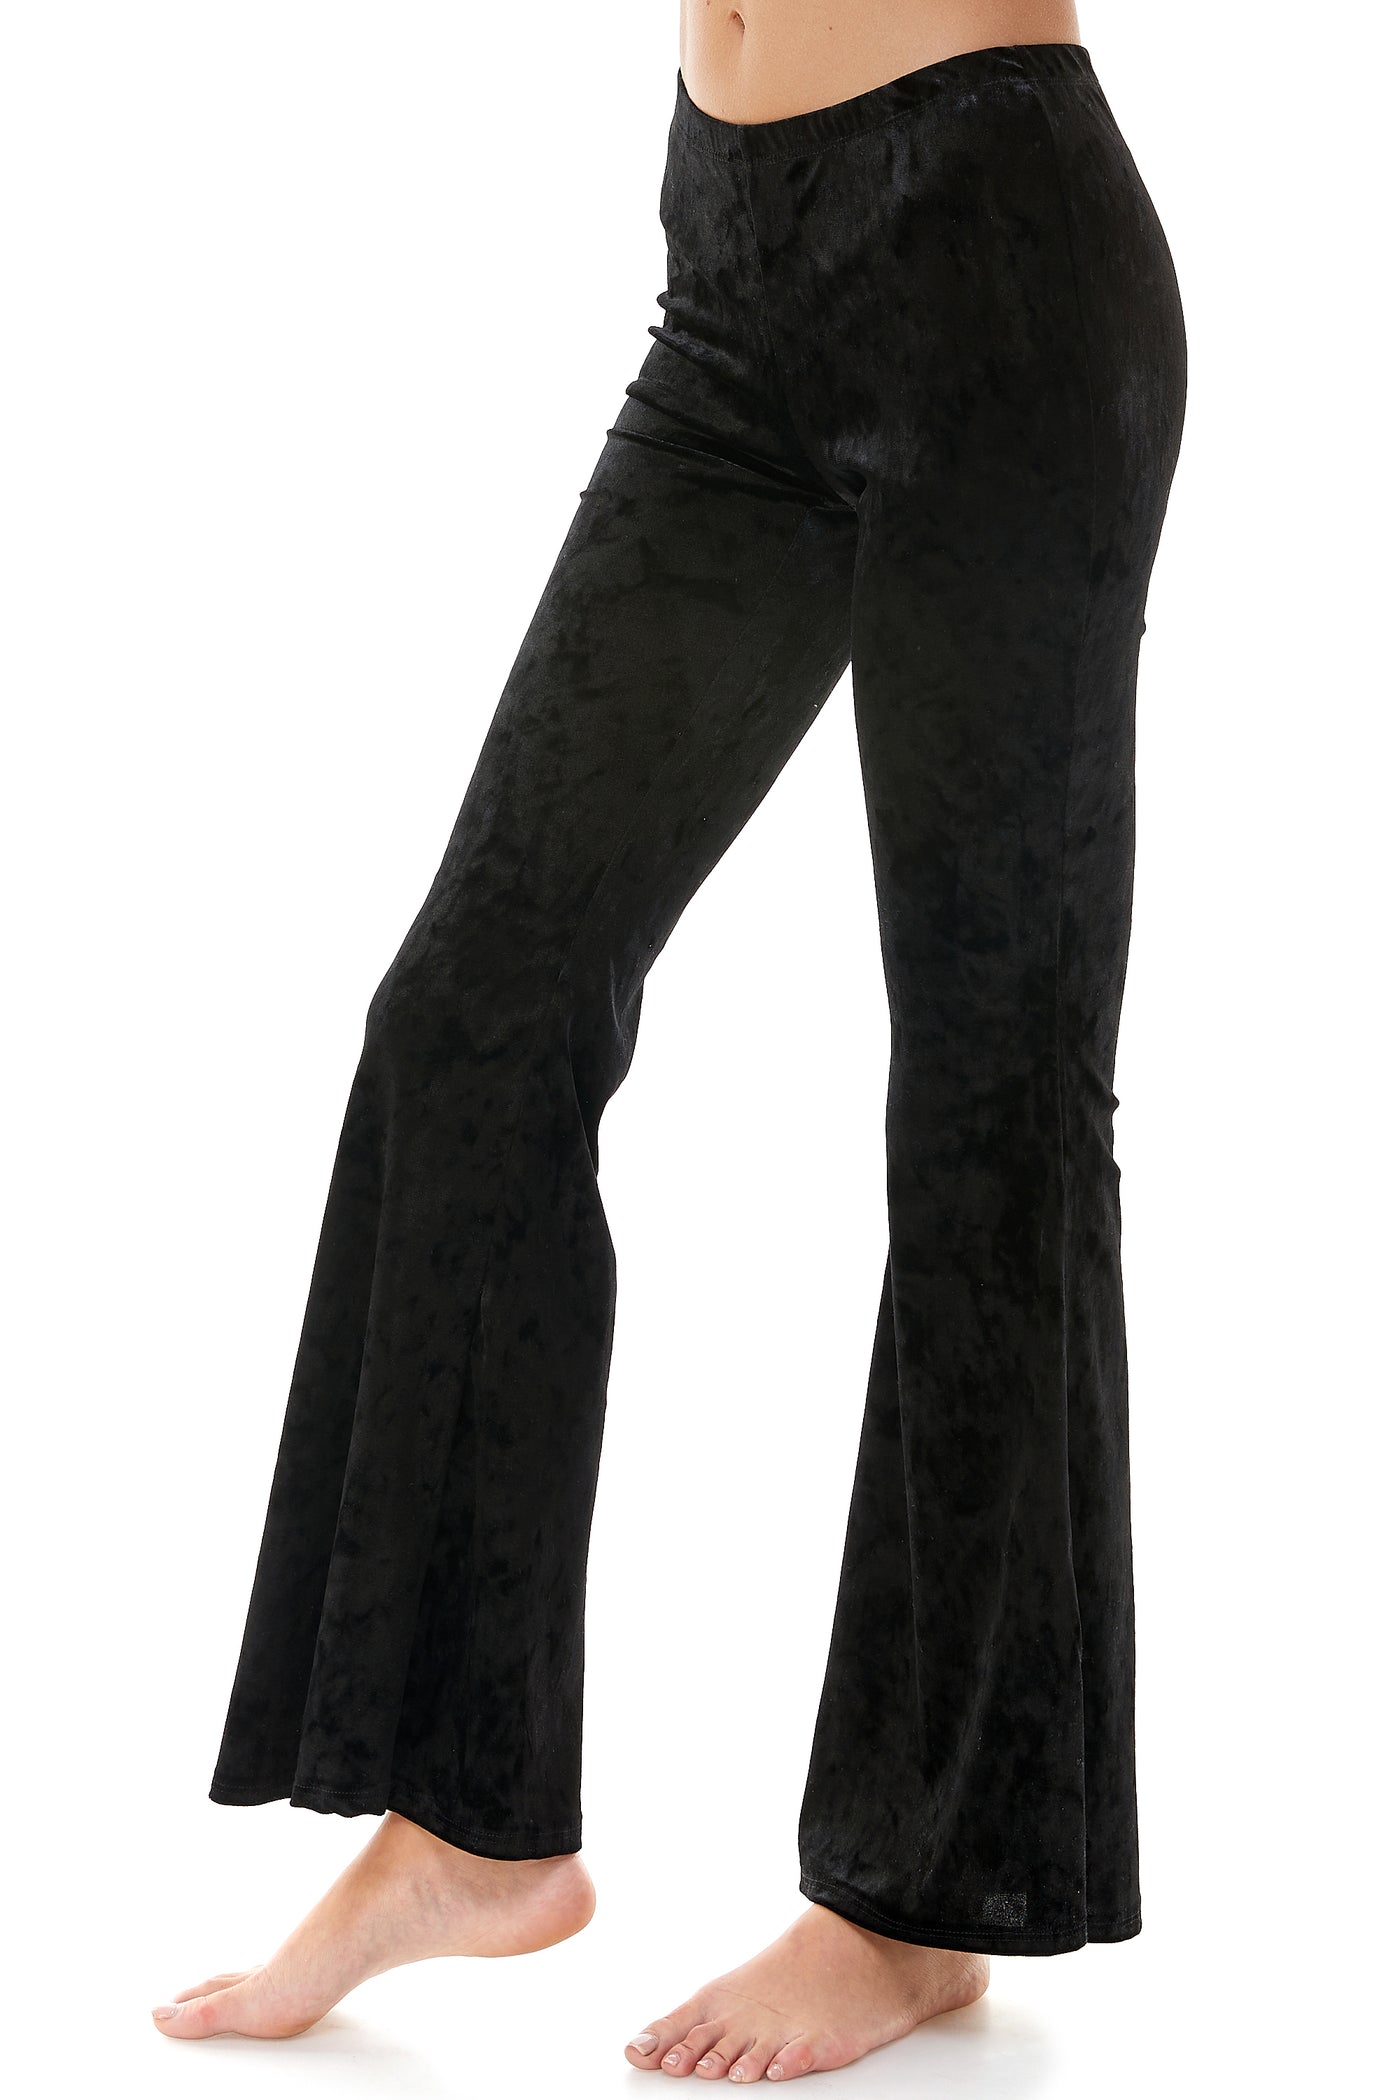 Black stretch velvet flare pants - Trailsclothing.com